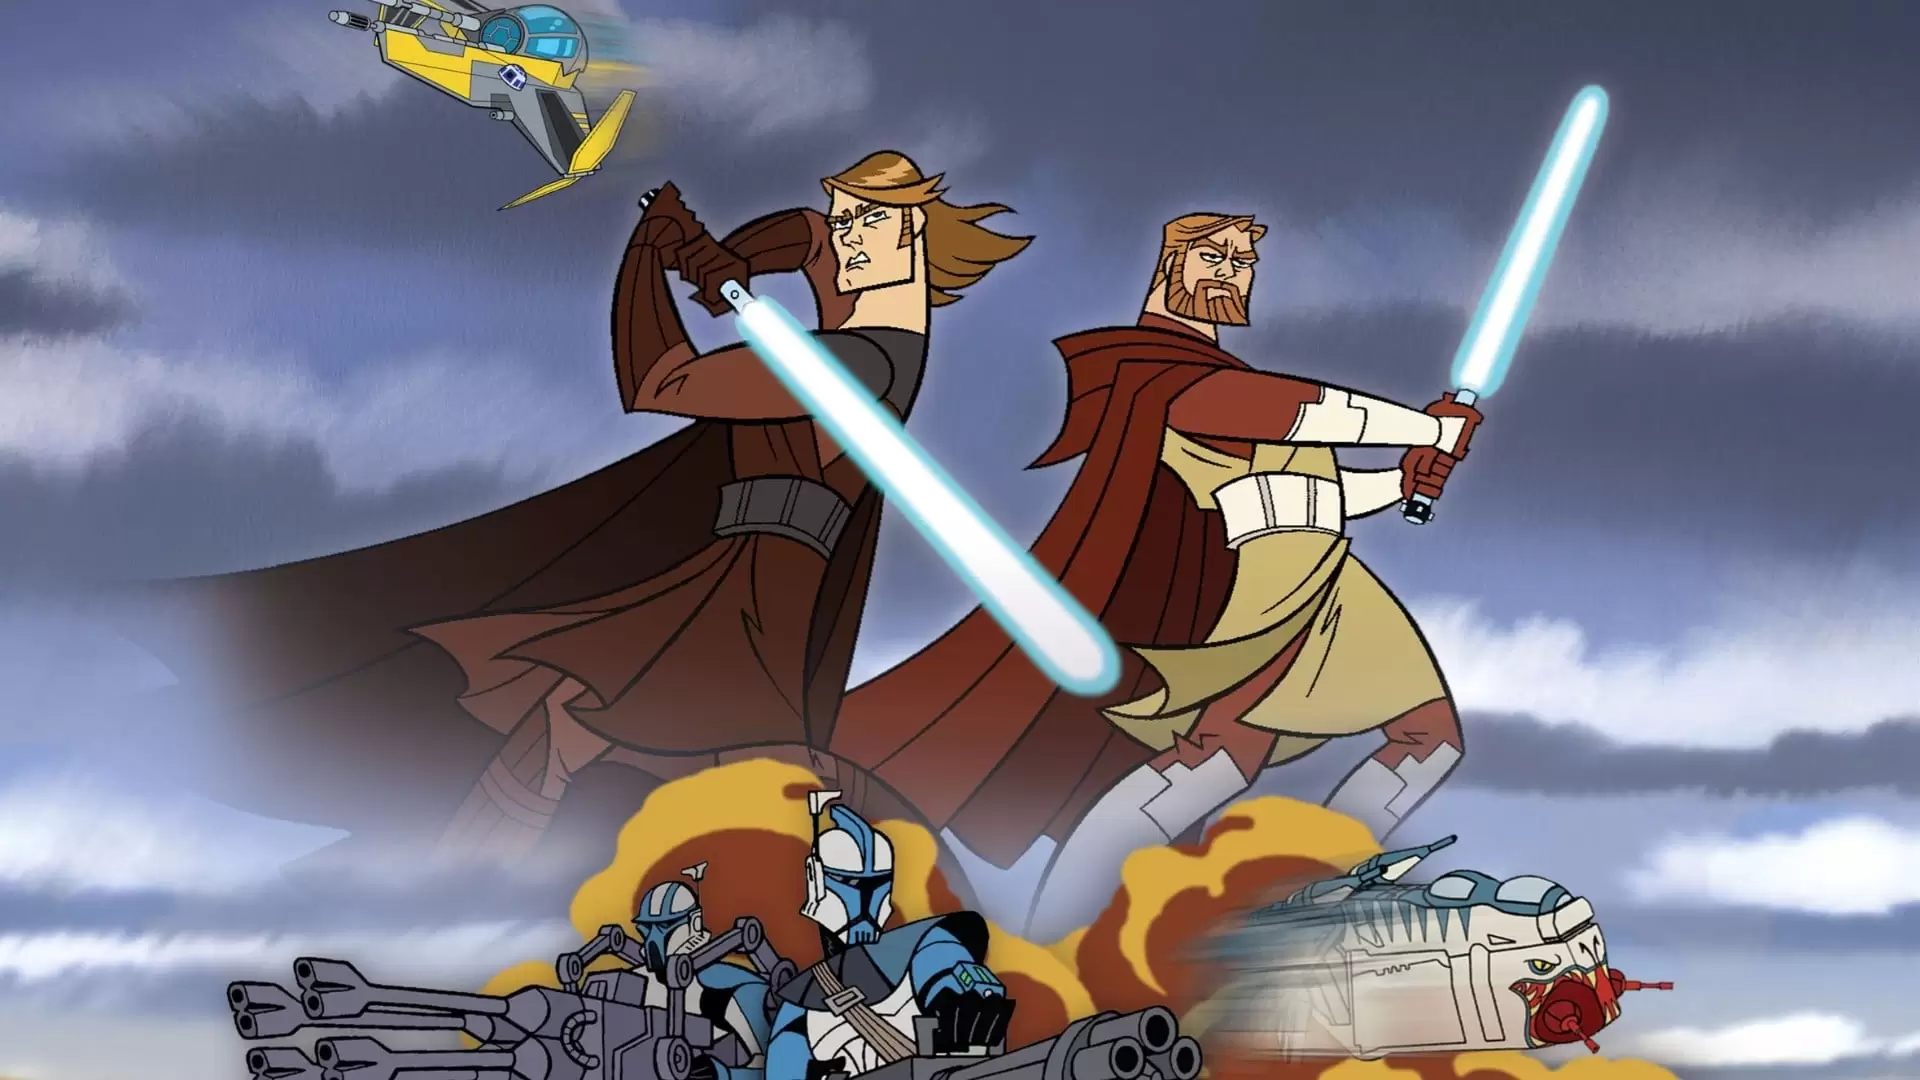 دانلود انیمیشن Star Wars: Clone Wars 2003 با زیرنویس فارسی